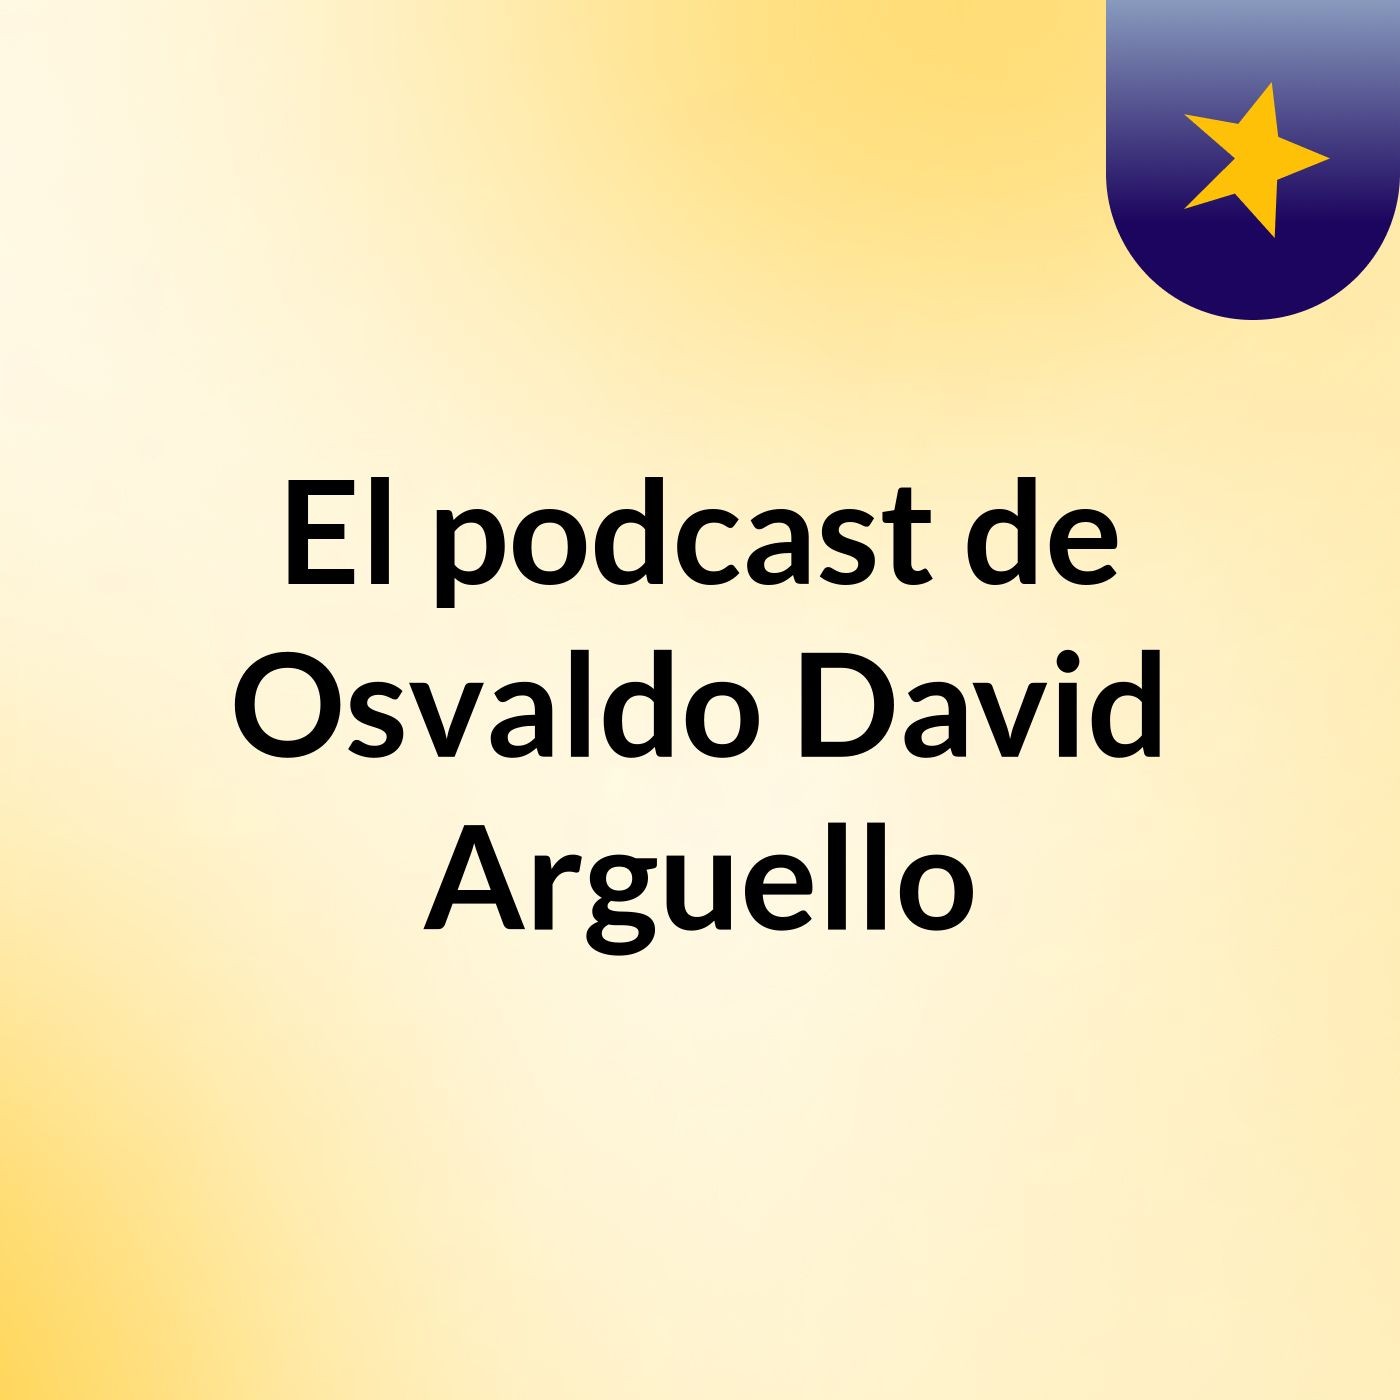 El podcast de Osvaldo David Arguello